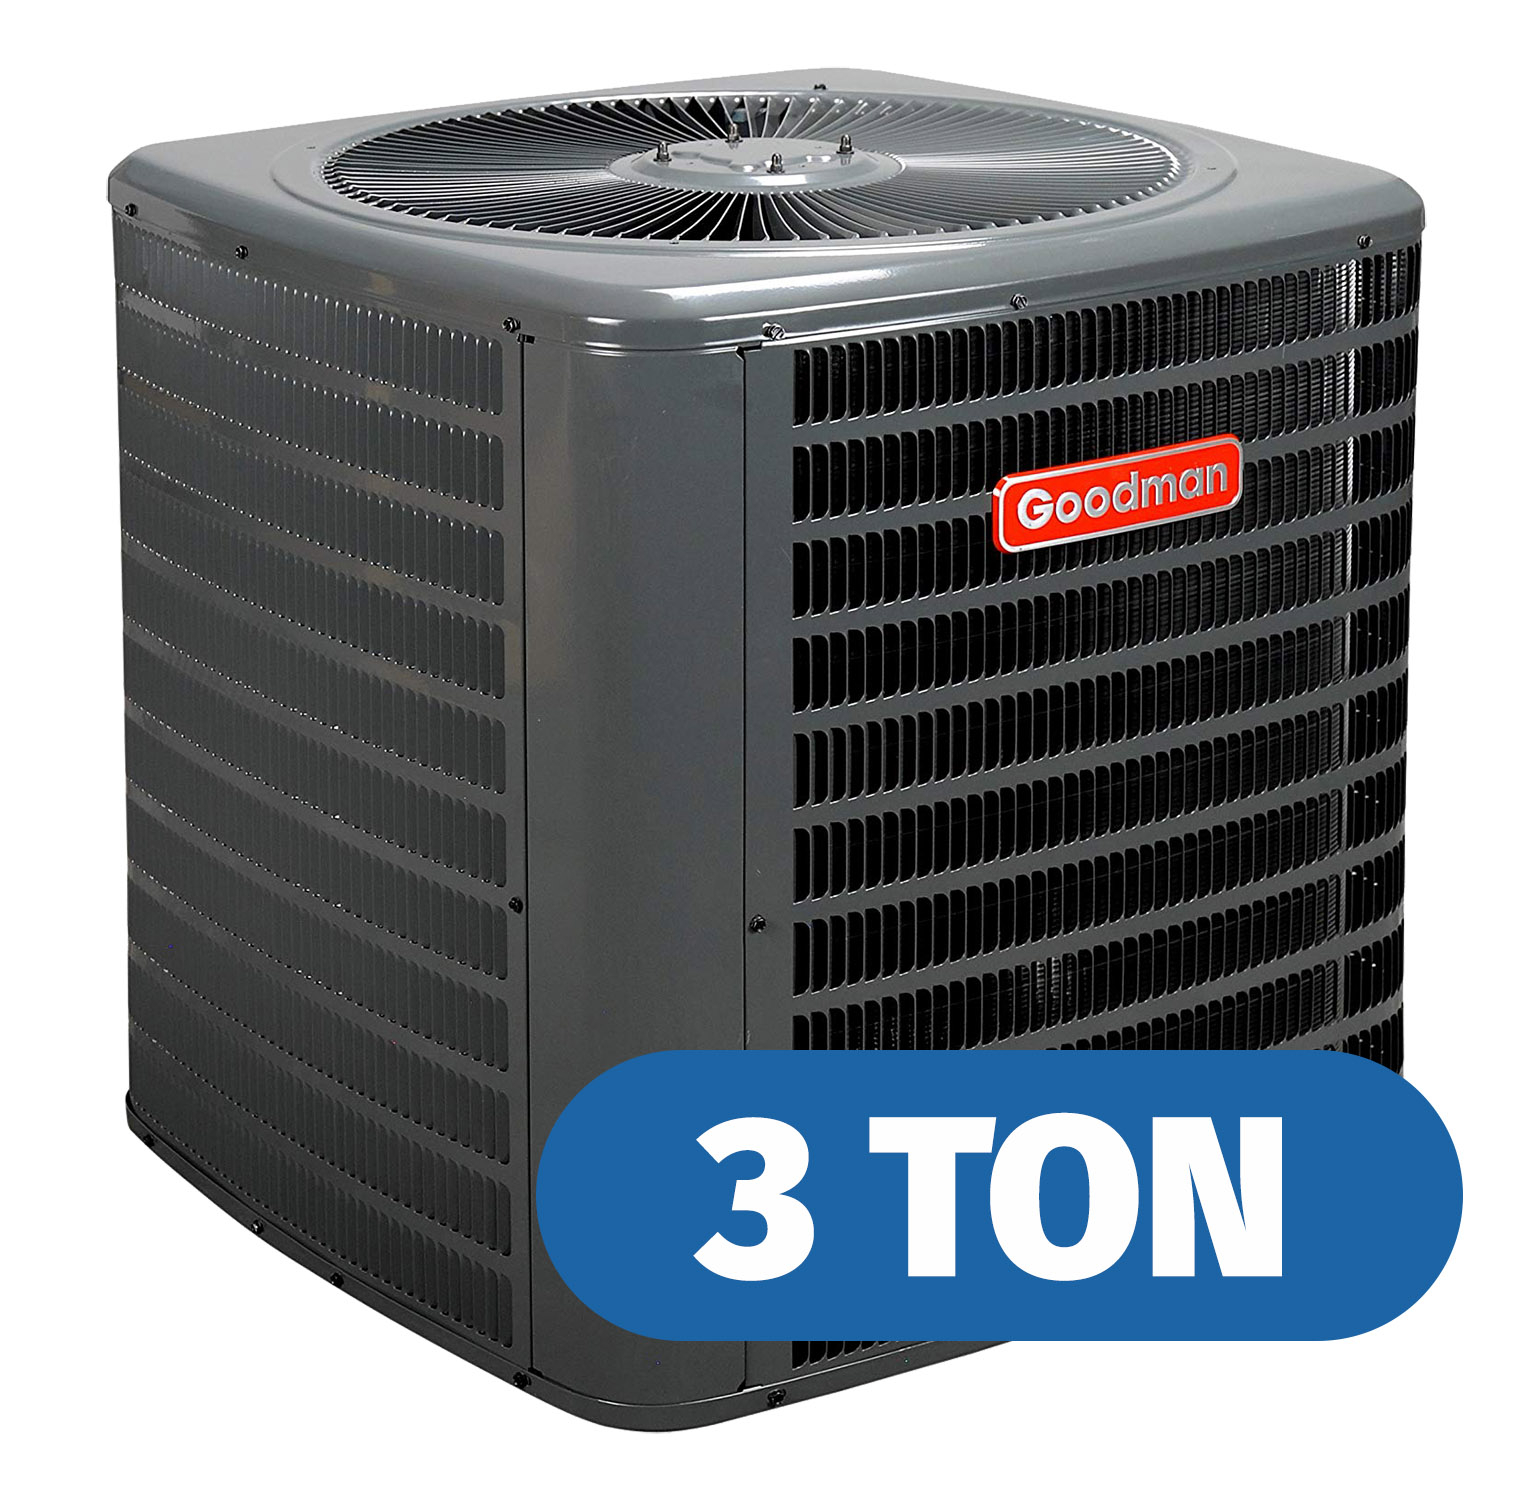 Goodman 3 Ton Air Conditioners 